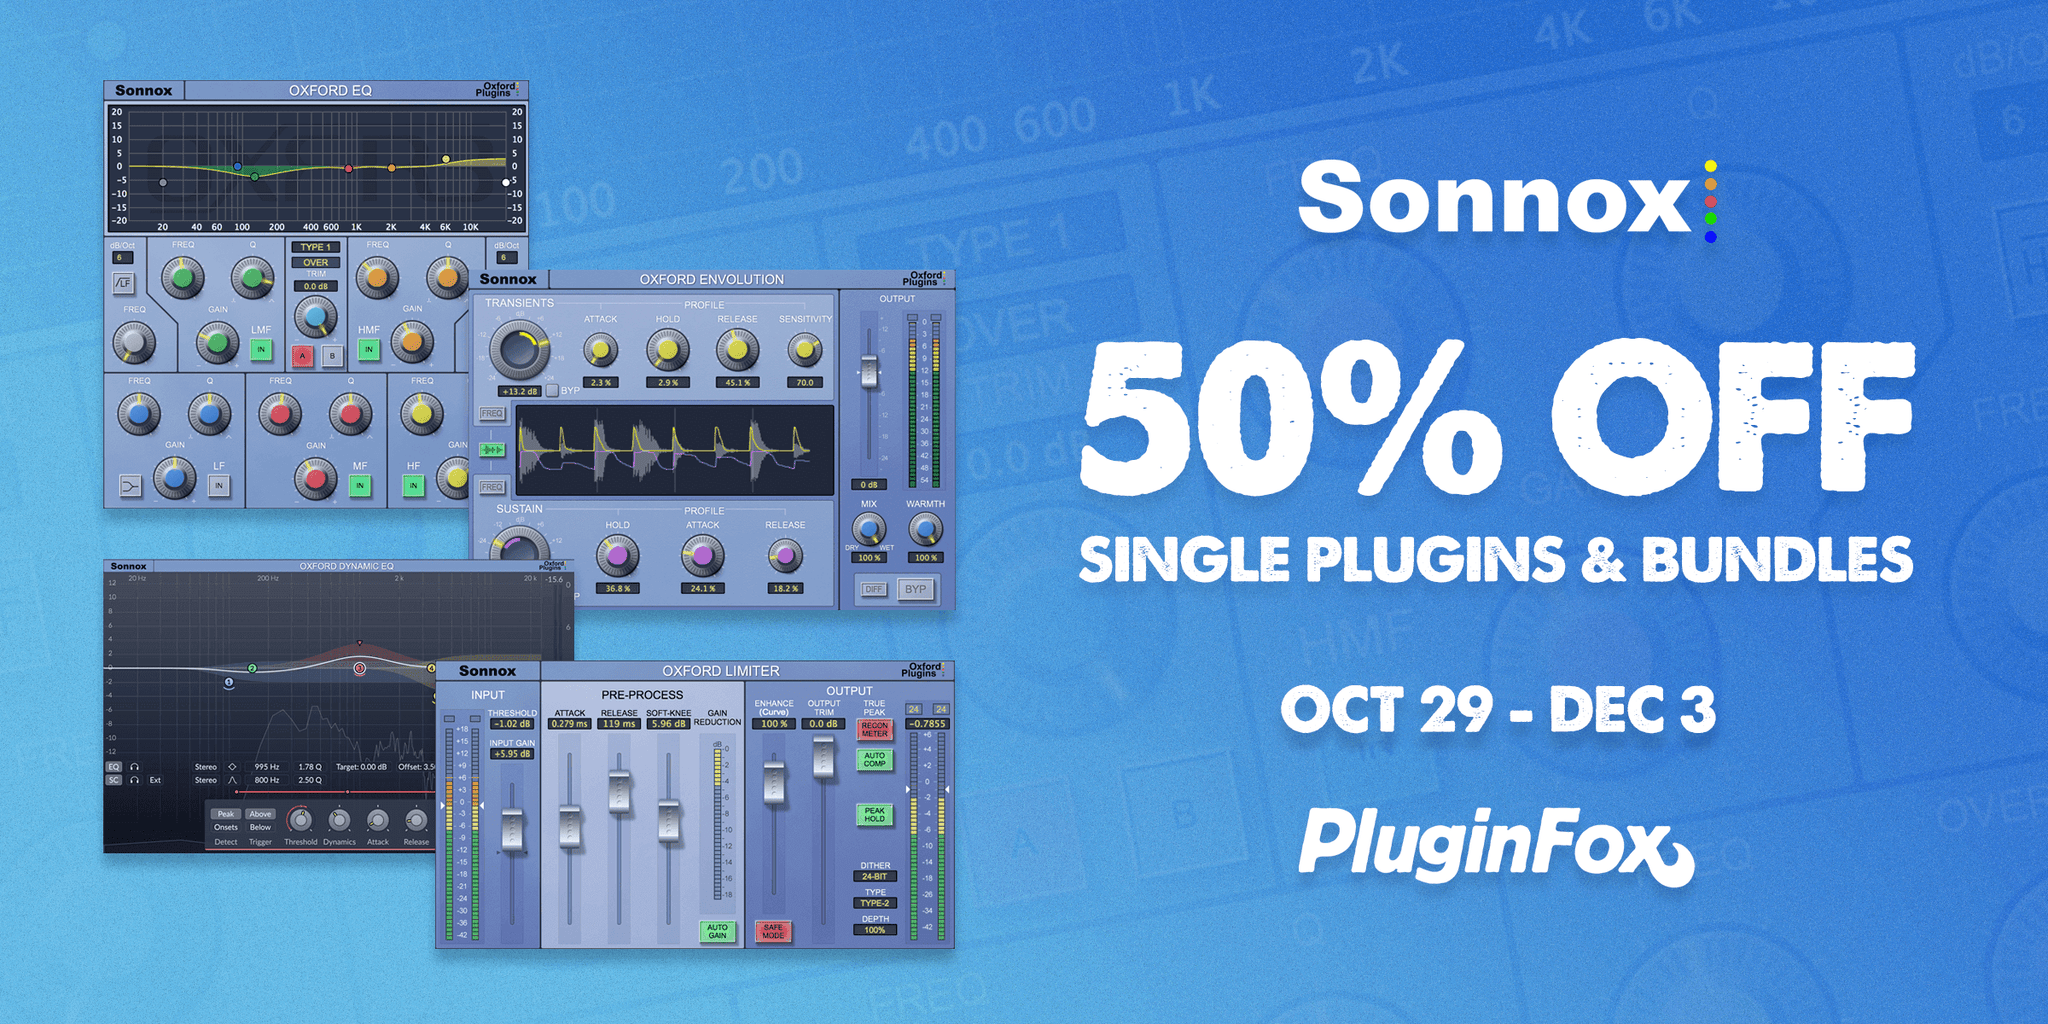 Sonnox November Sale - 50% off - Oct 29 - Dec 3